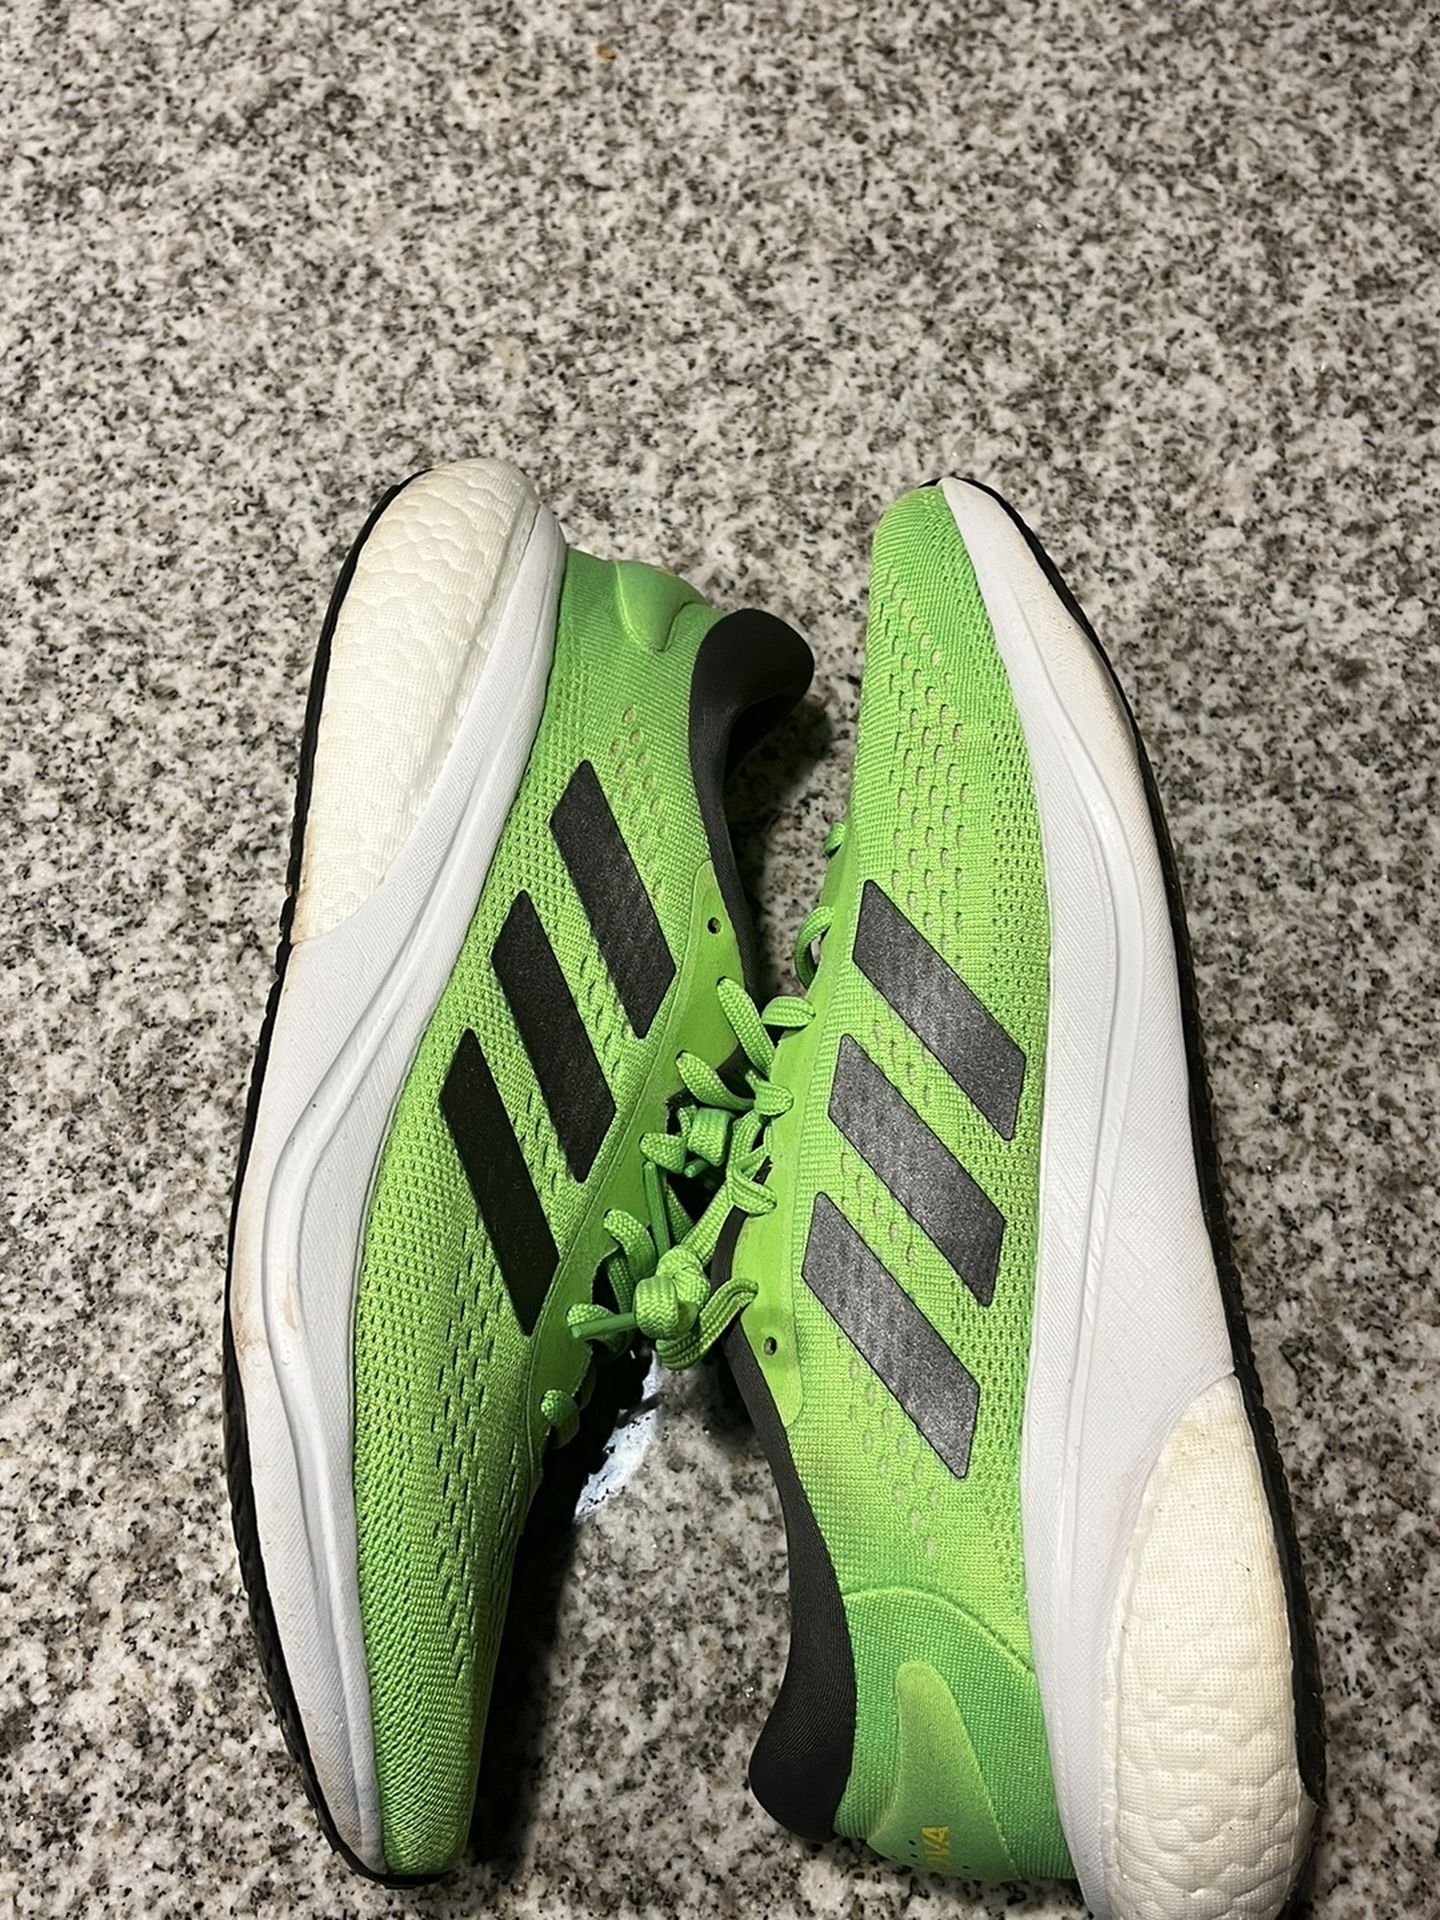 Adidas Running Shoes 